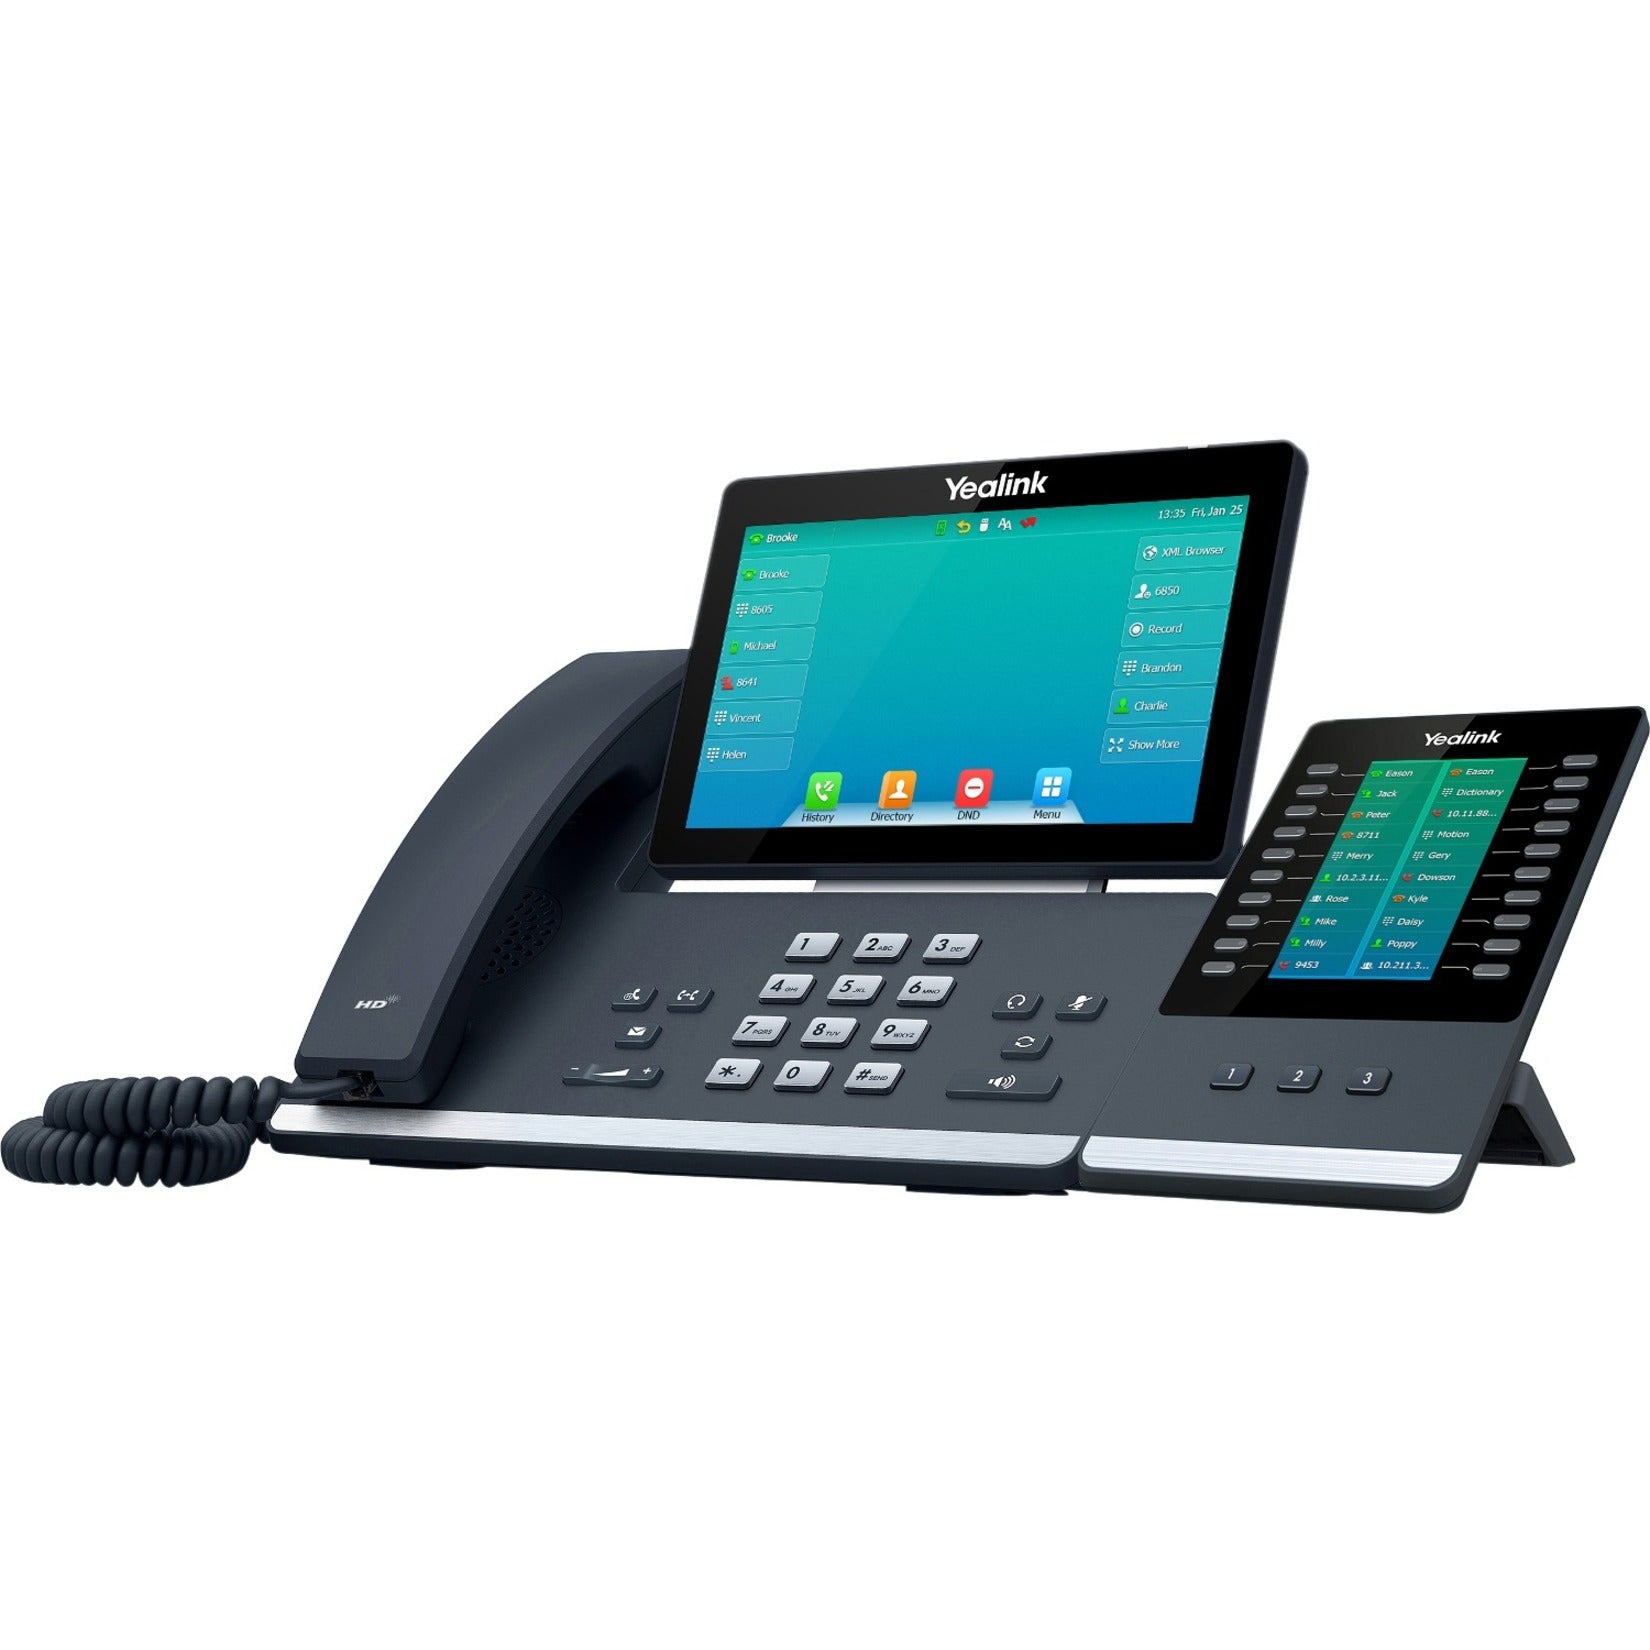 Yealink 1301089 Prime Business Phone to Deliver Optimum Desktop Productivity, Caller ID, Speakerphone, Bluetooth, Wi-Fi